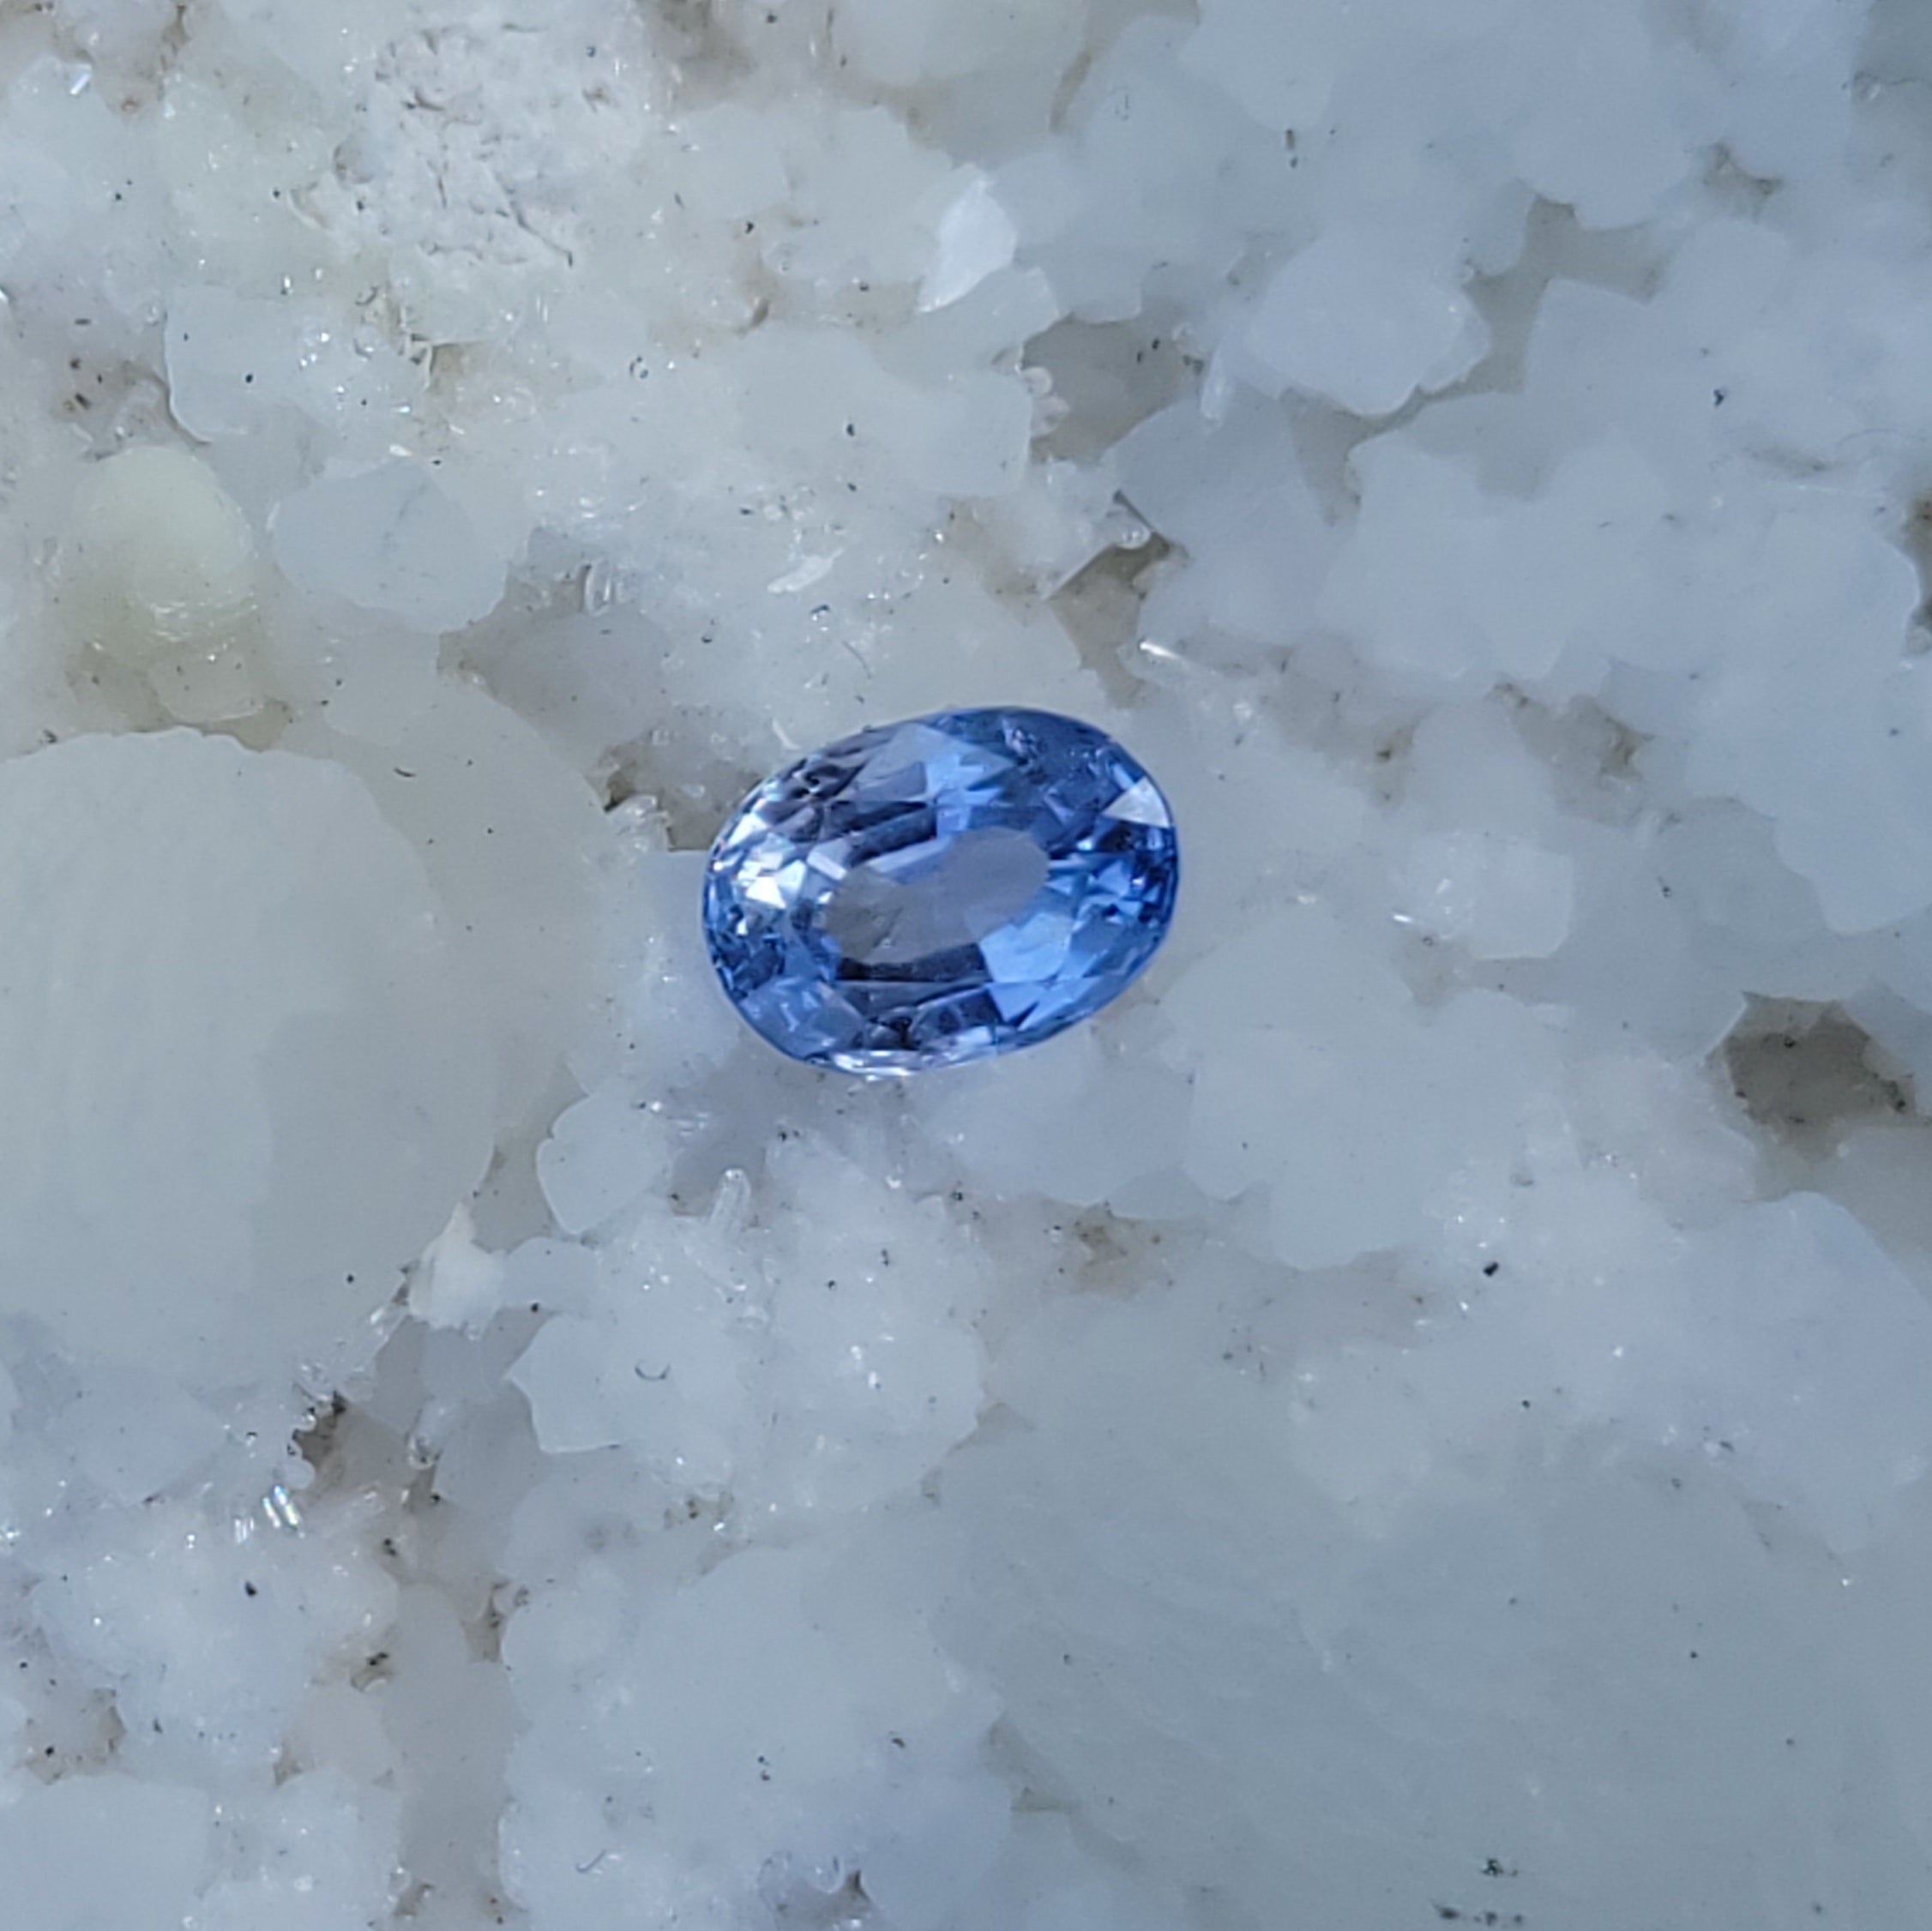 Sri Lanken Sapphire 1.23 CT Periwinkle, Silver, White, Clear Oval Cut